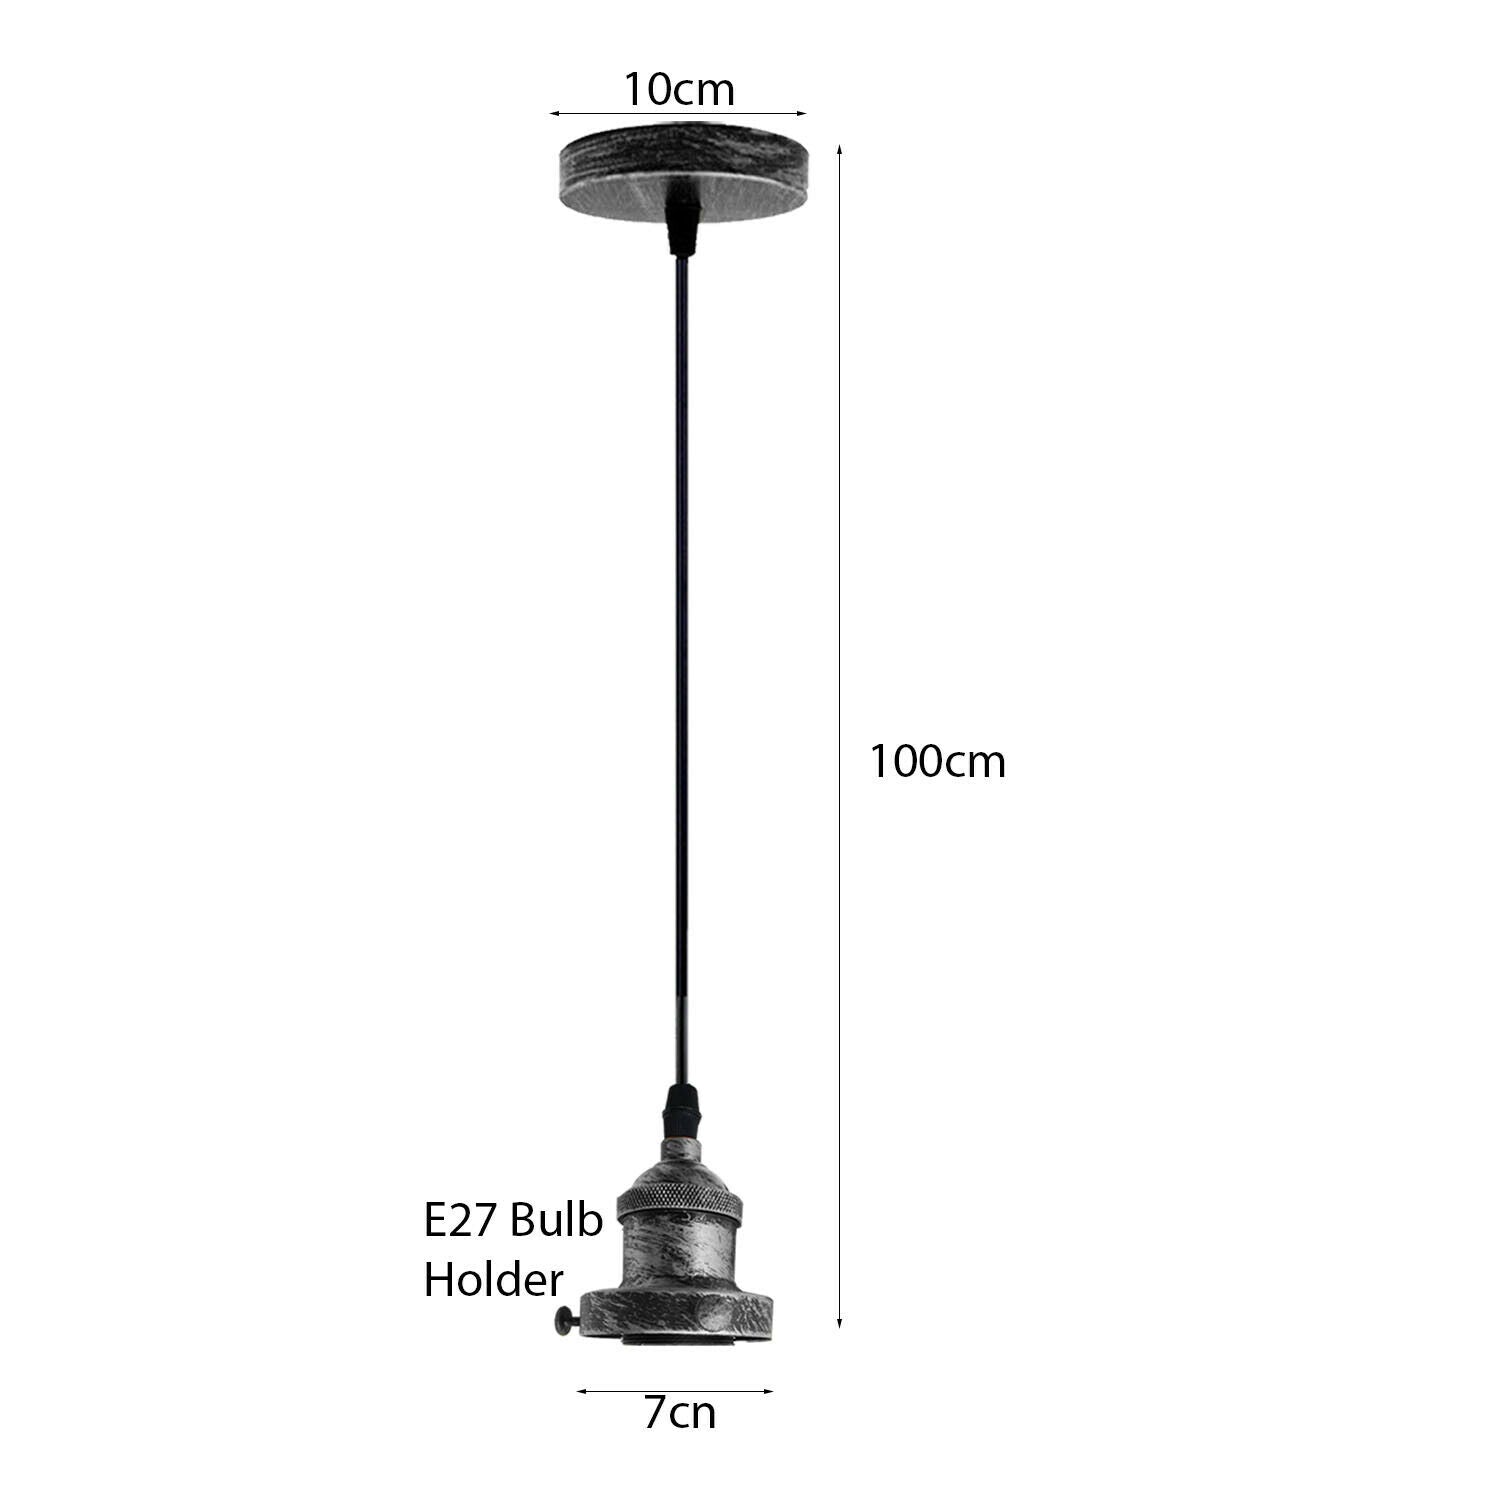 E27 Ceiling Rose Light Fitting Vintage Industrial Pendant Lamp Bulb Holder Light - Brushed Silver~2207 - LEDSone UK Ltd